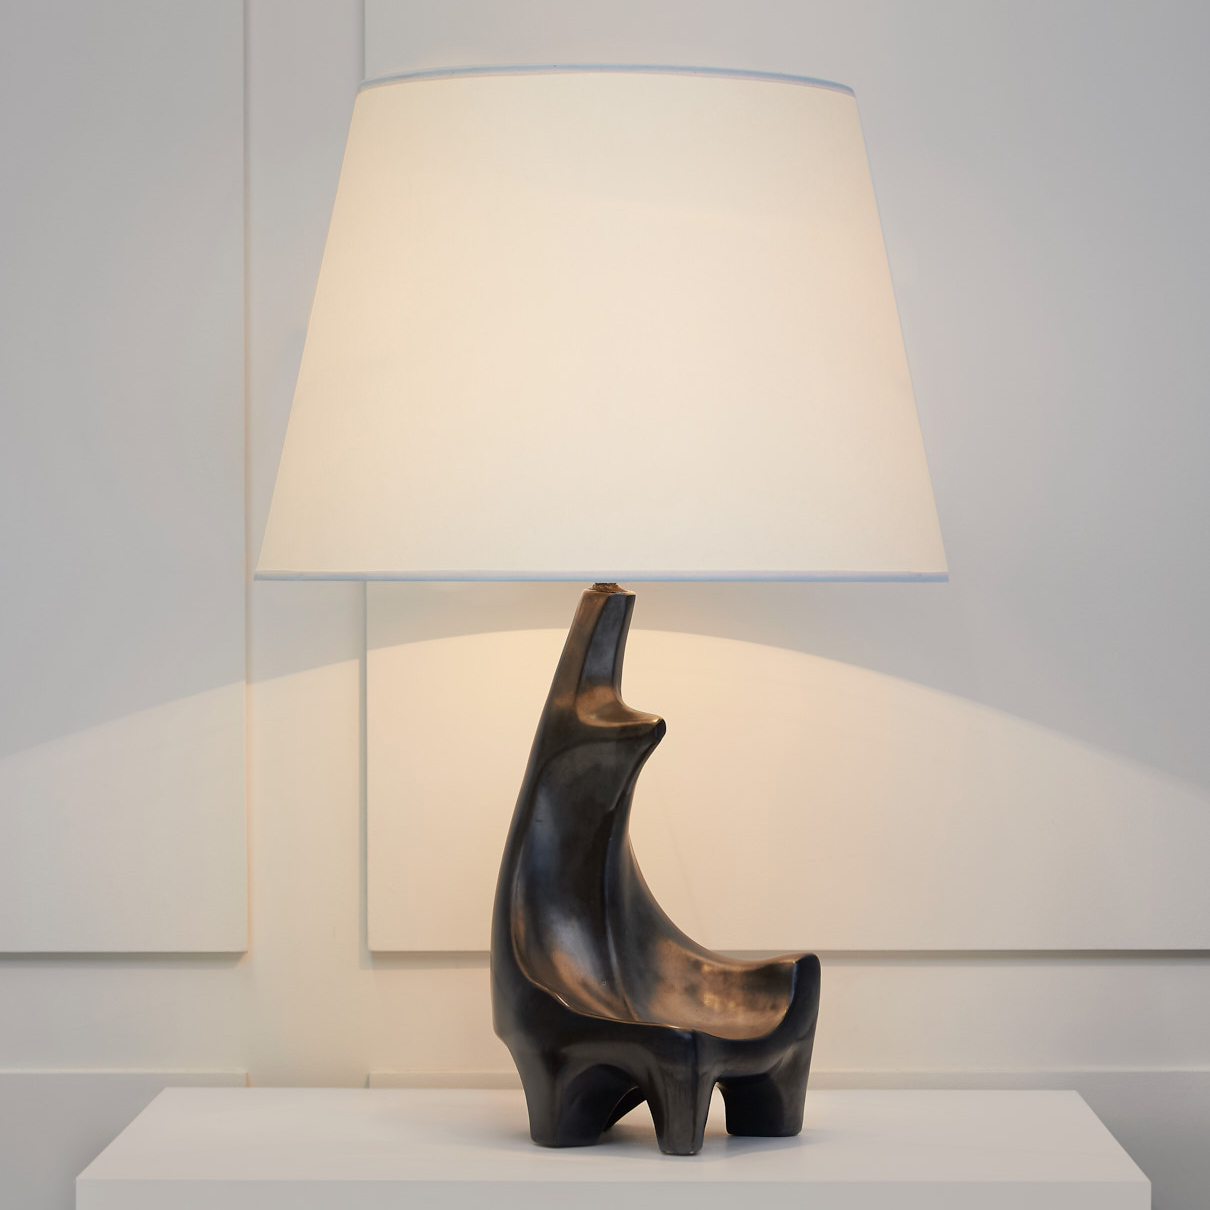 Anthropomorphic lamp